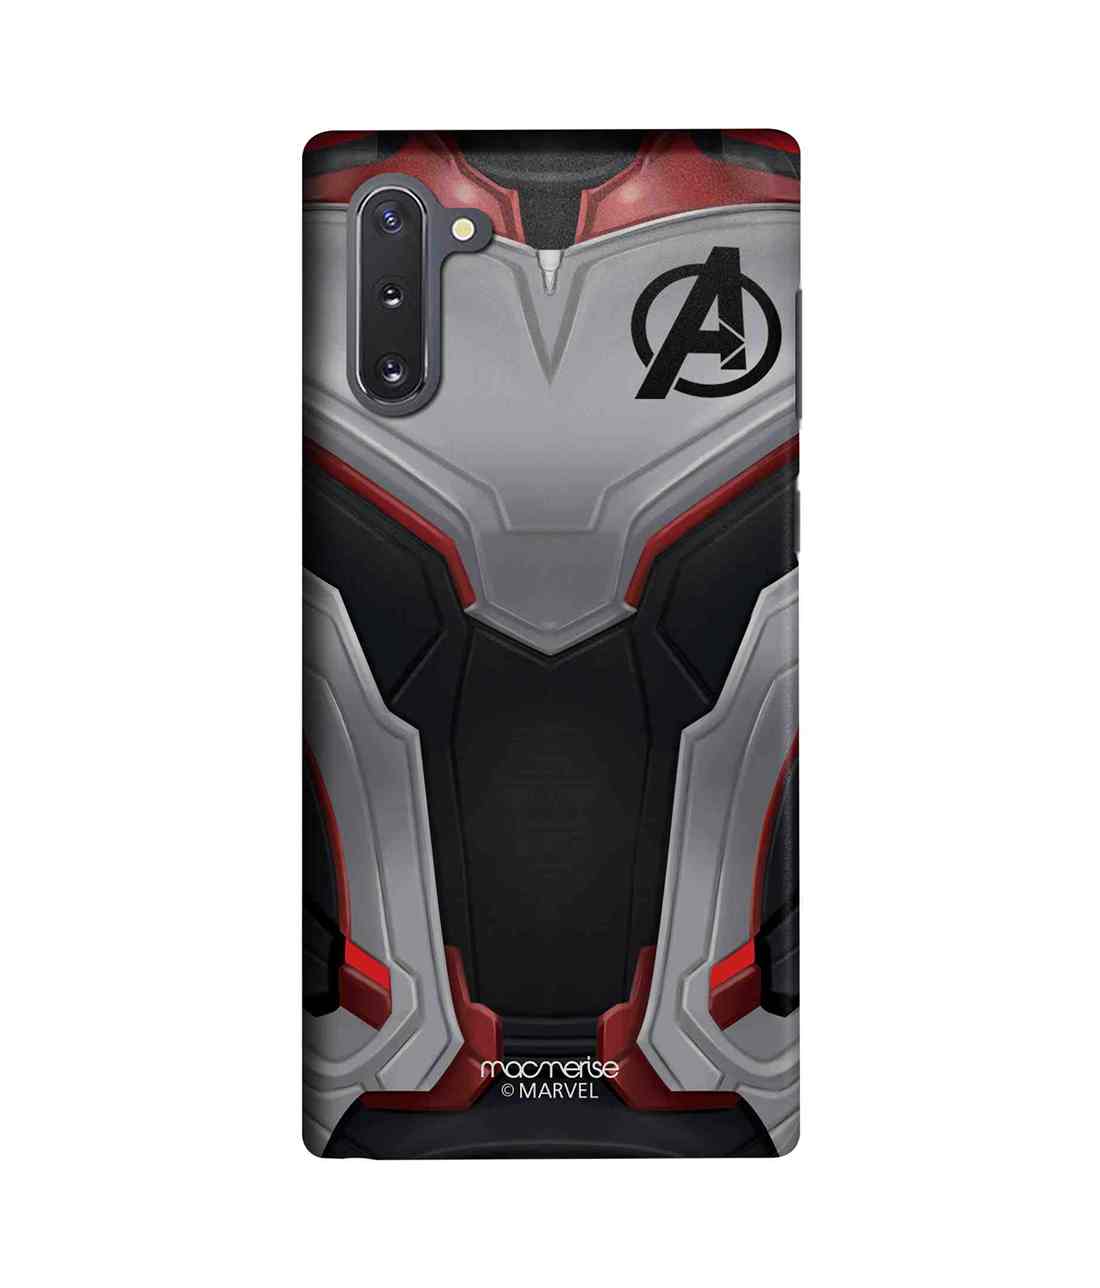 Avengers Endgame Suit - Sleek Phone Case for Samsung Note10